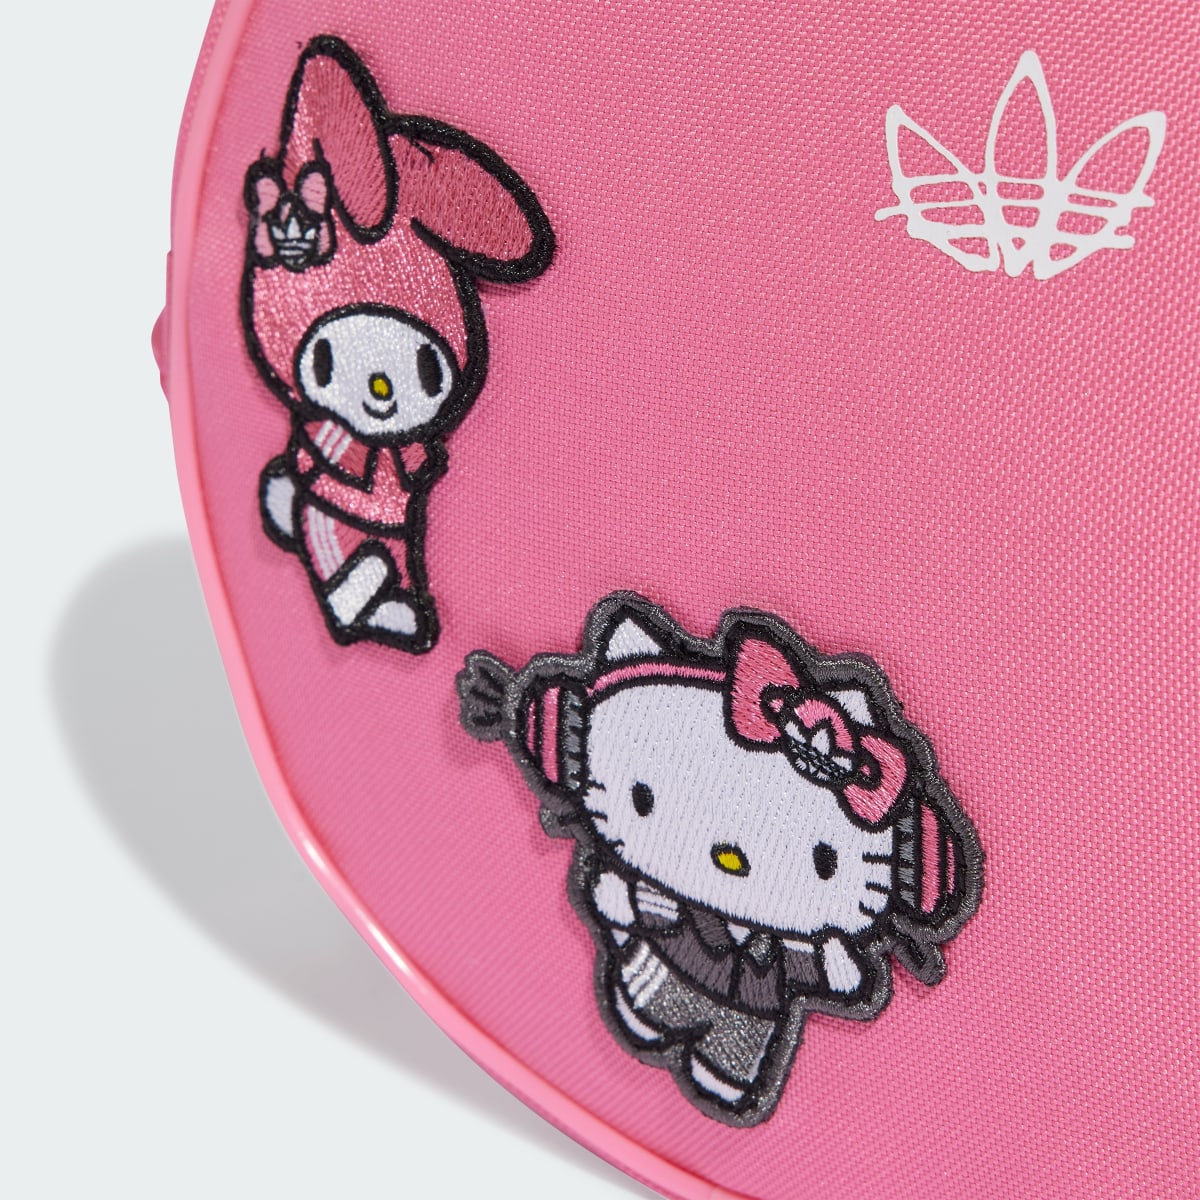 Adidas Originals x Hello Kitty and Friends Round Bag. 6